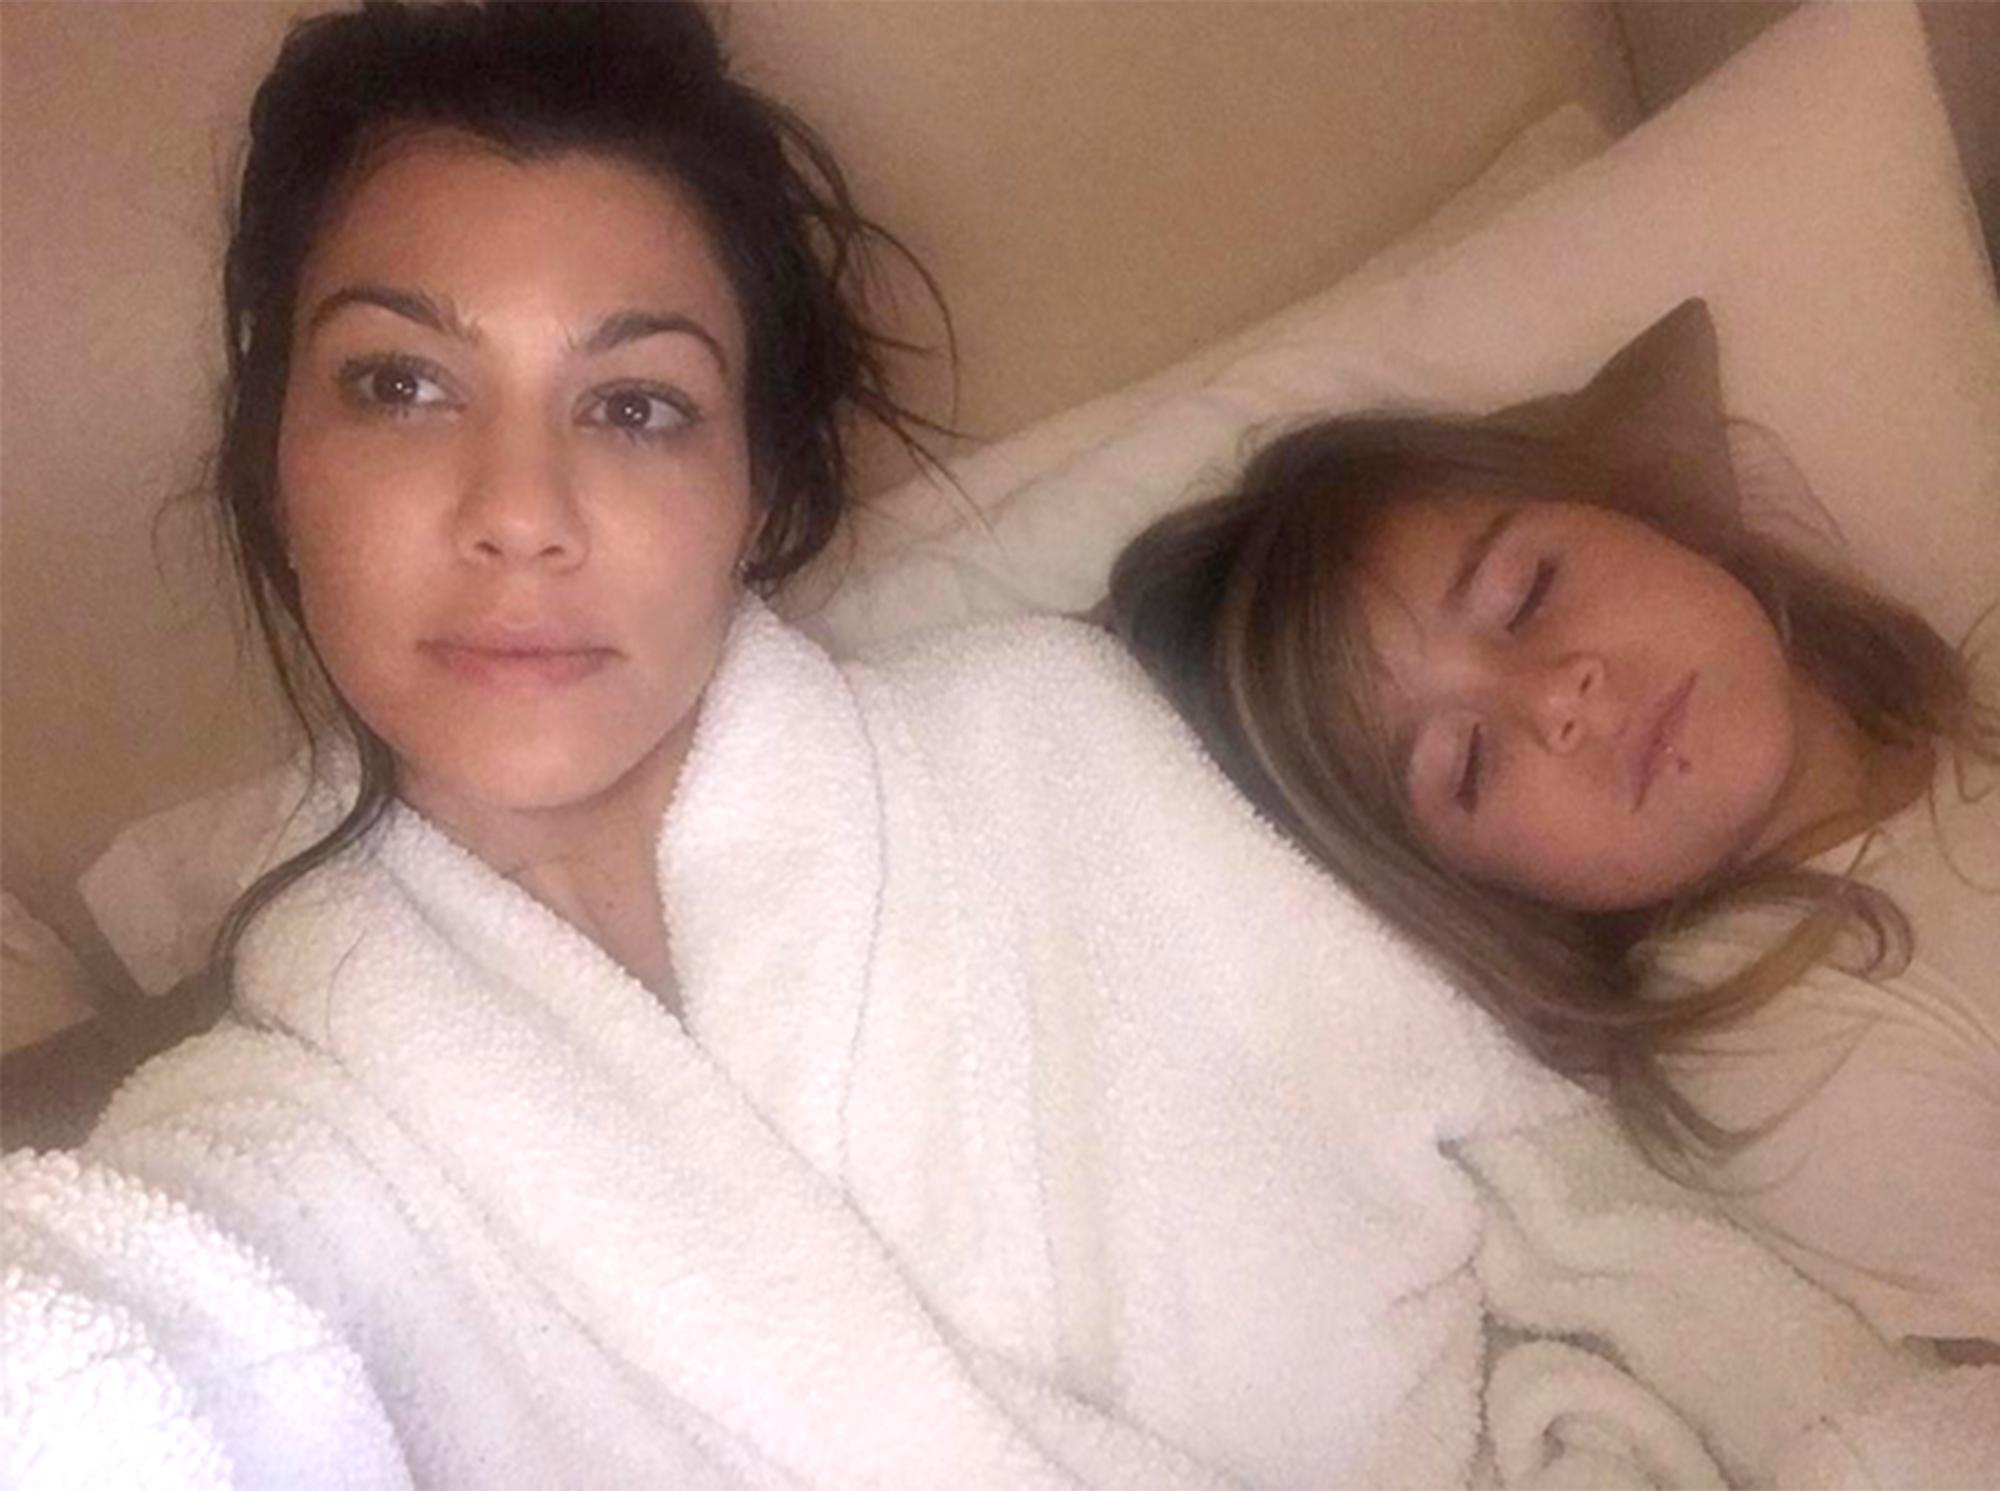 //Kourtney Kardashian and P in bed